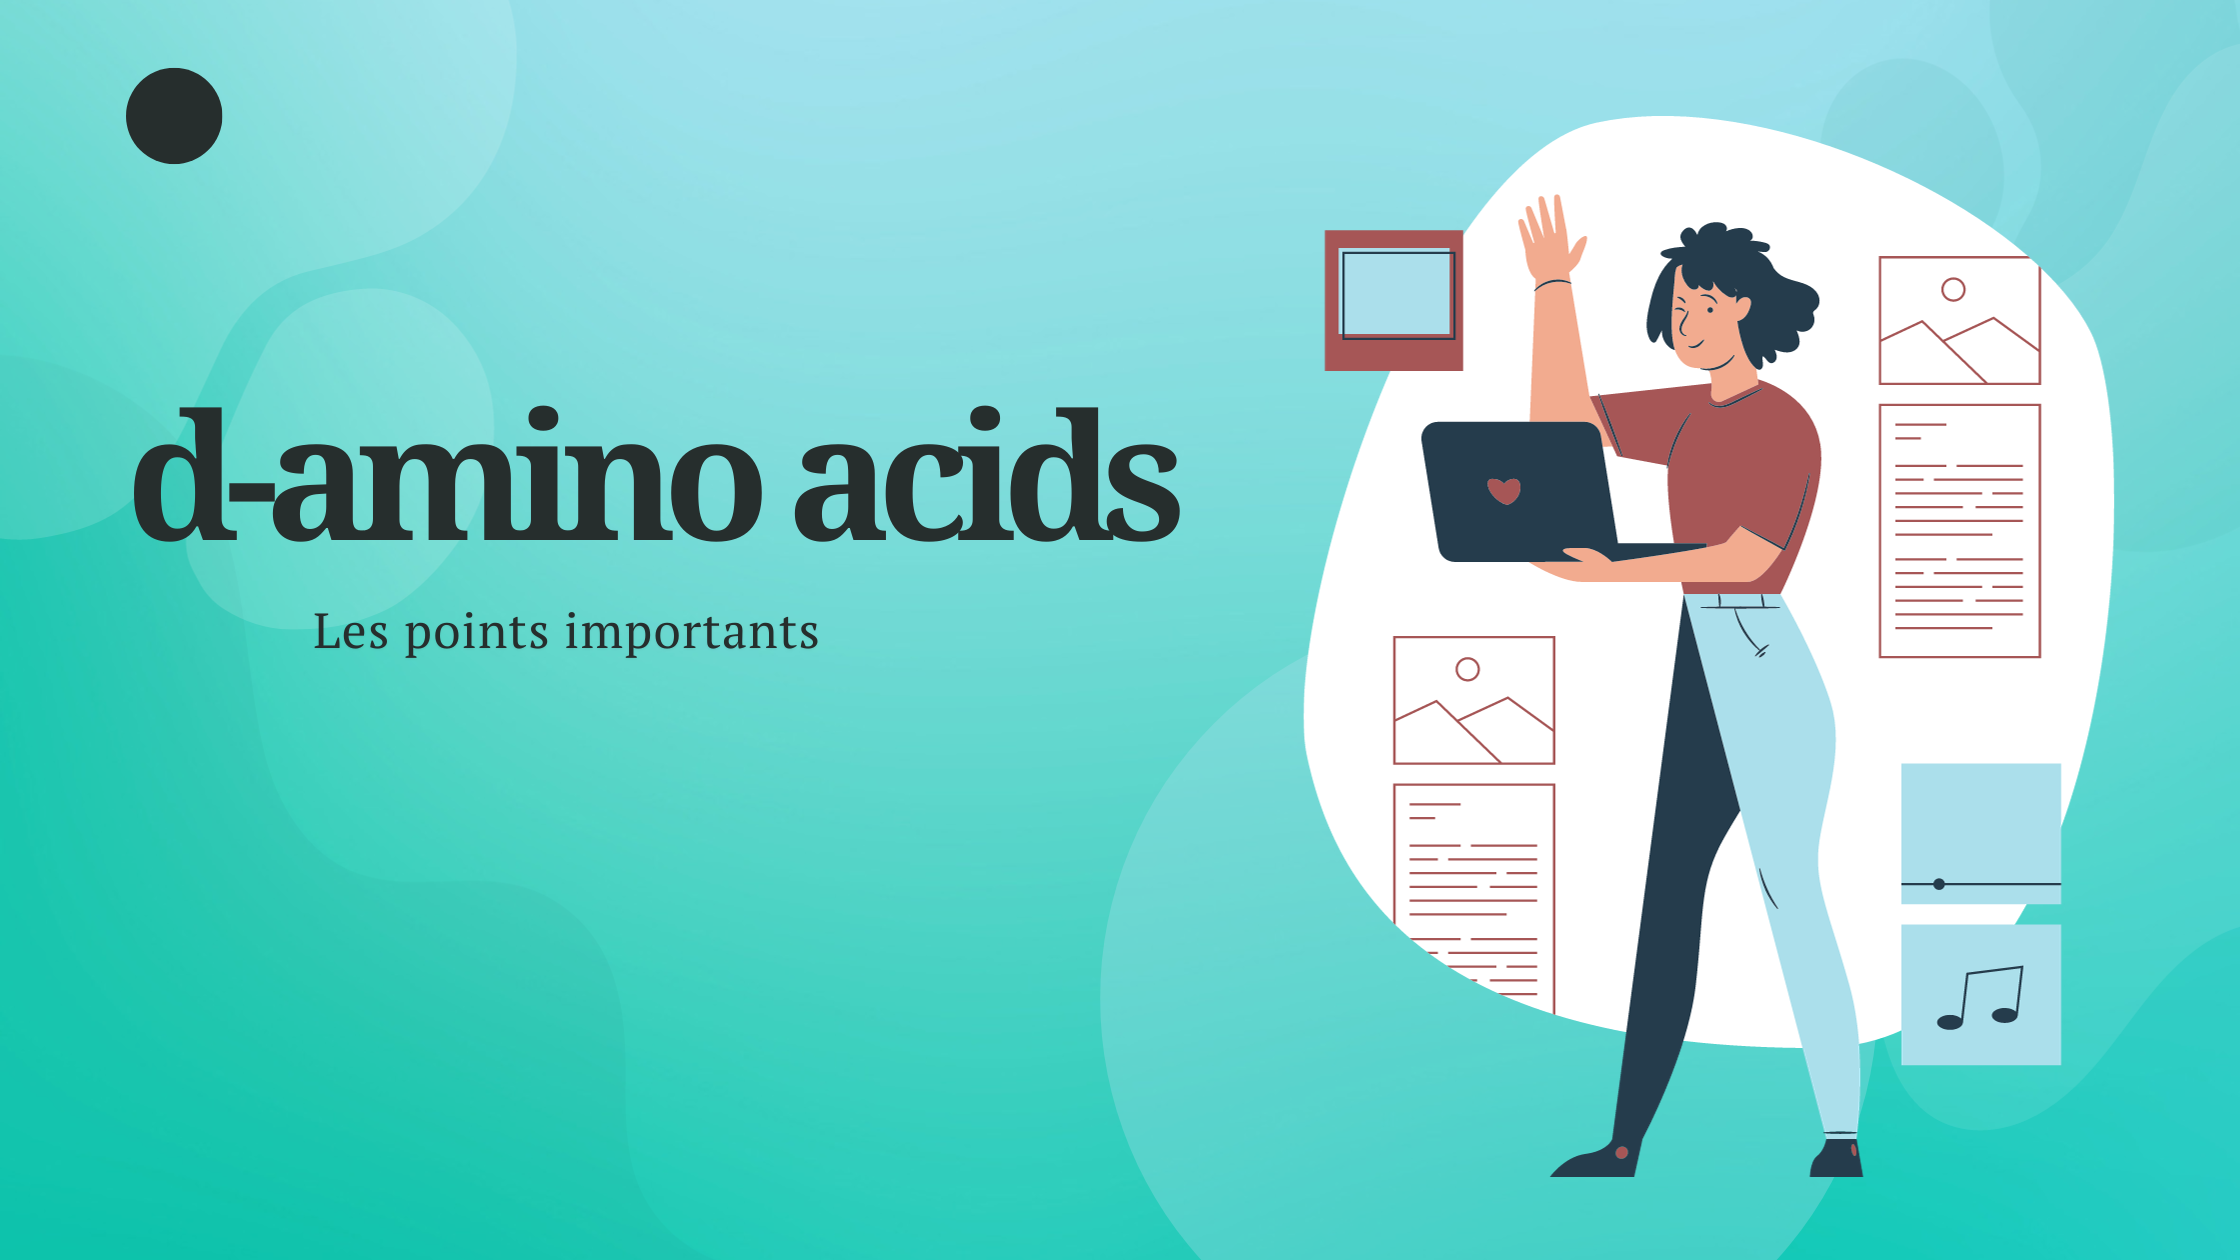 d-amino acids | Les points importants